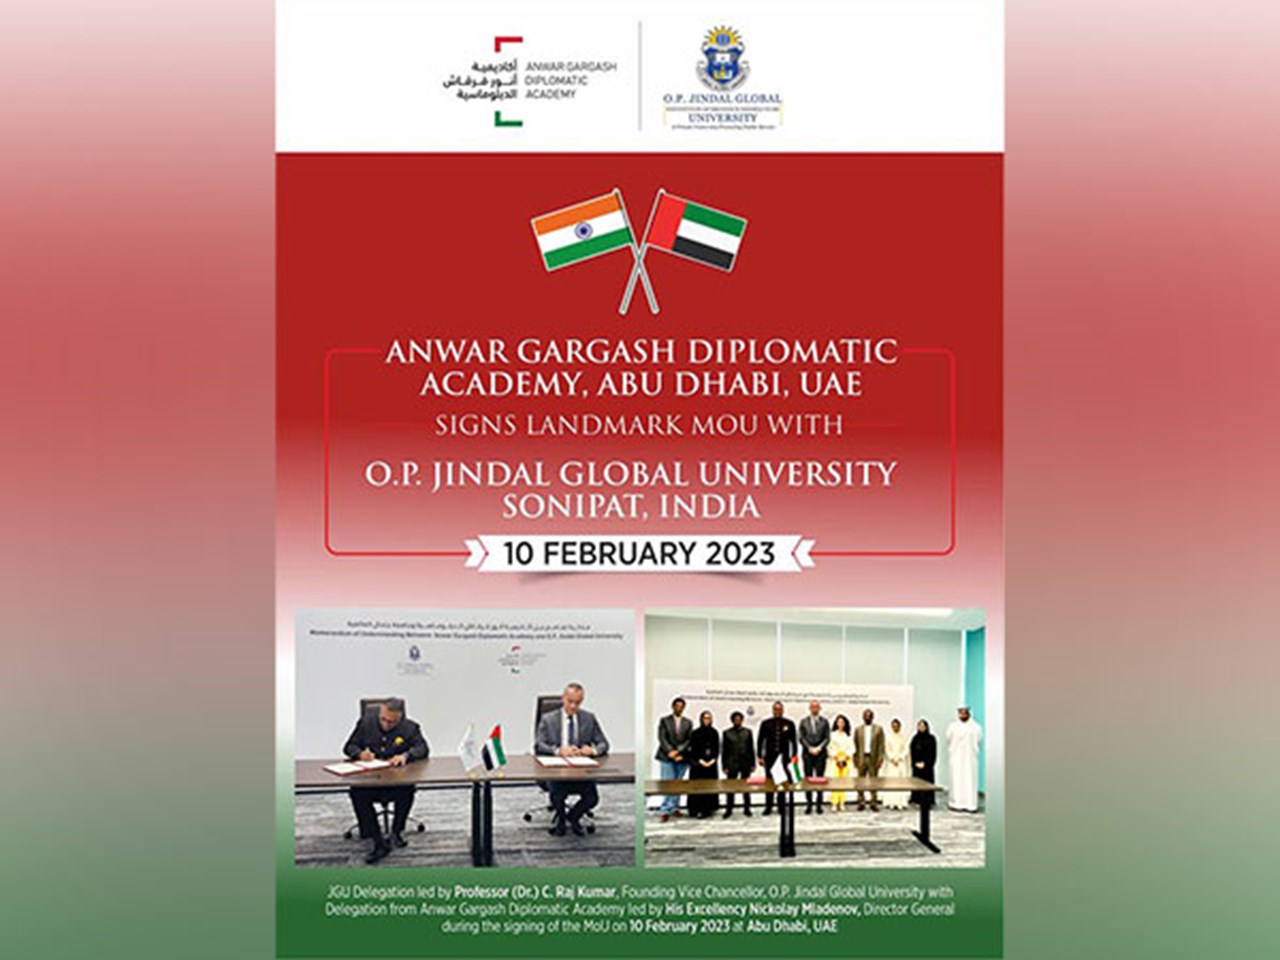 Anwar Gargash Diplomatic Academy in Abu Dhabi, UAE signs landmark MoU with India’s OP Jindal Global University